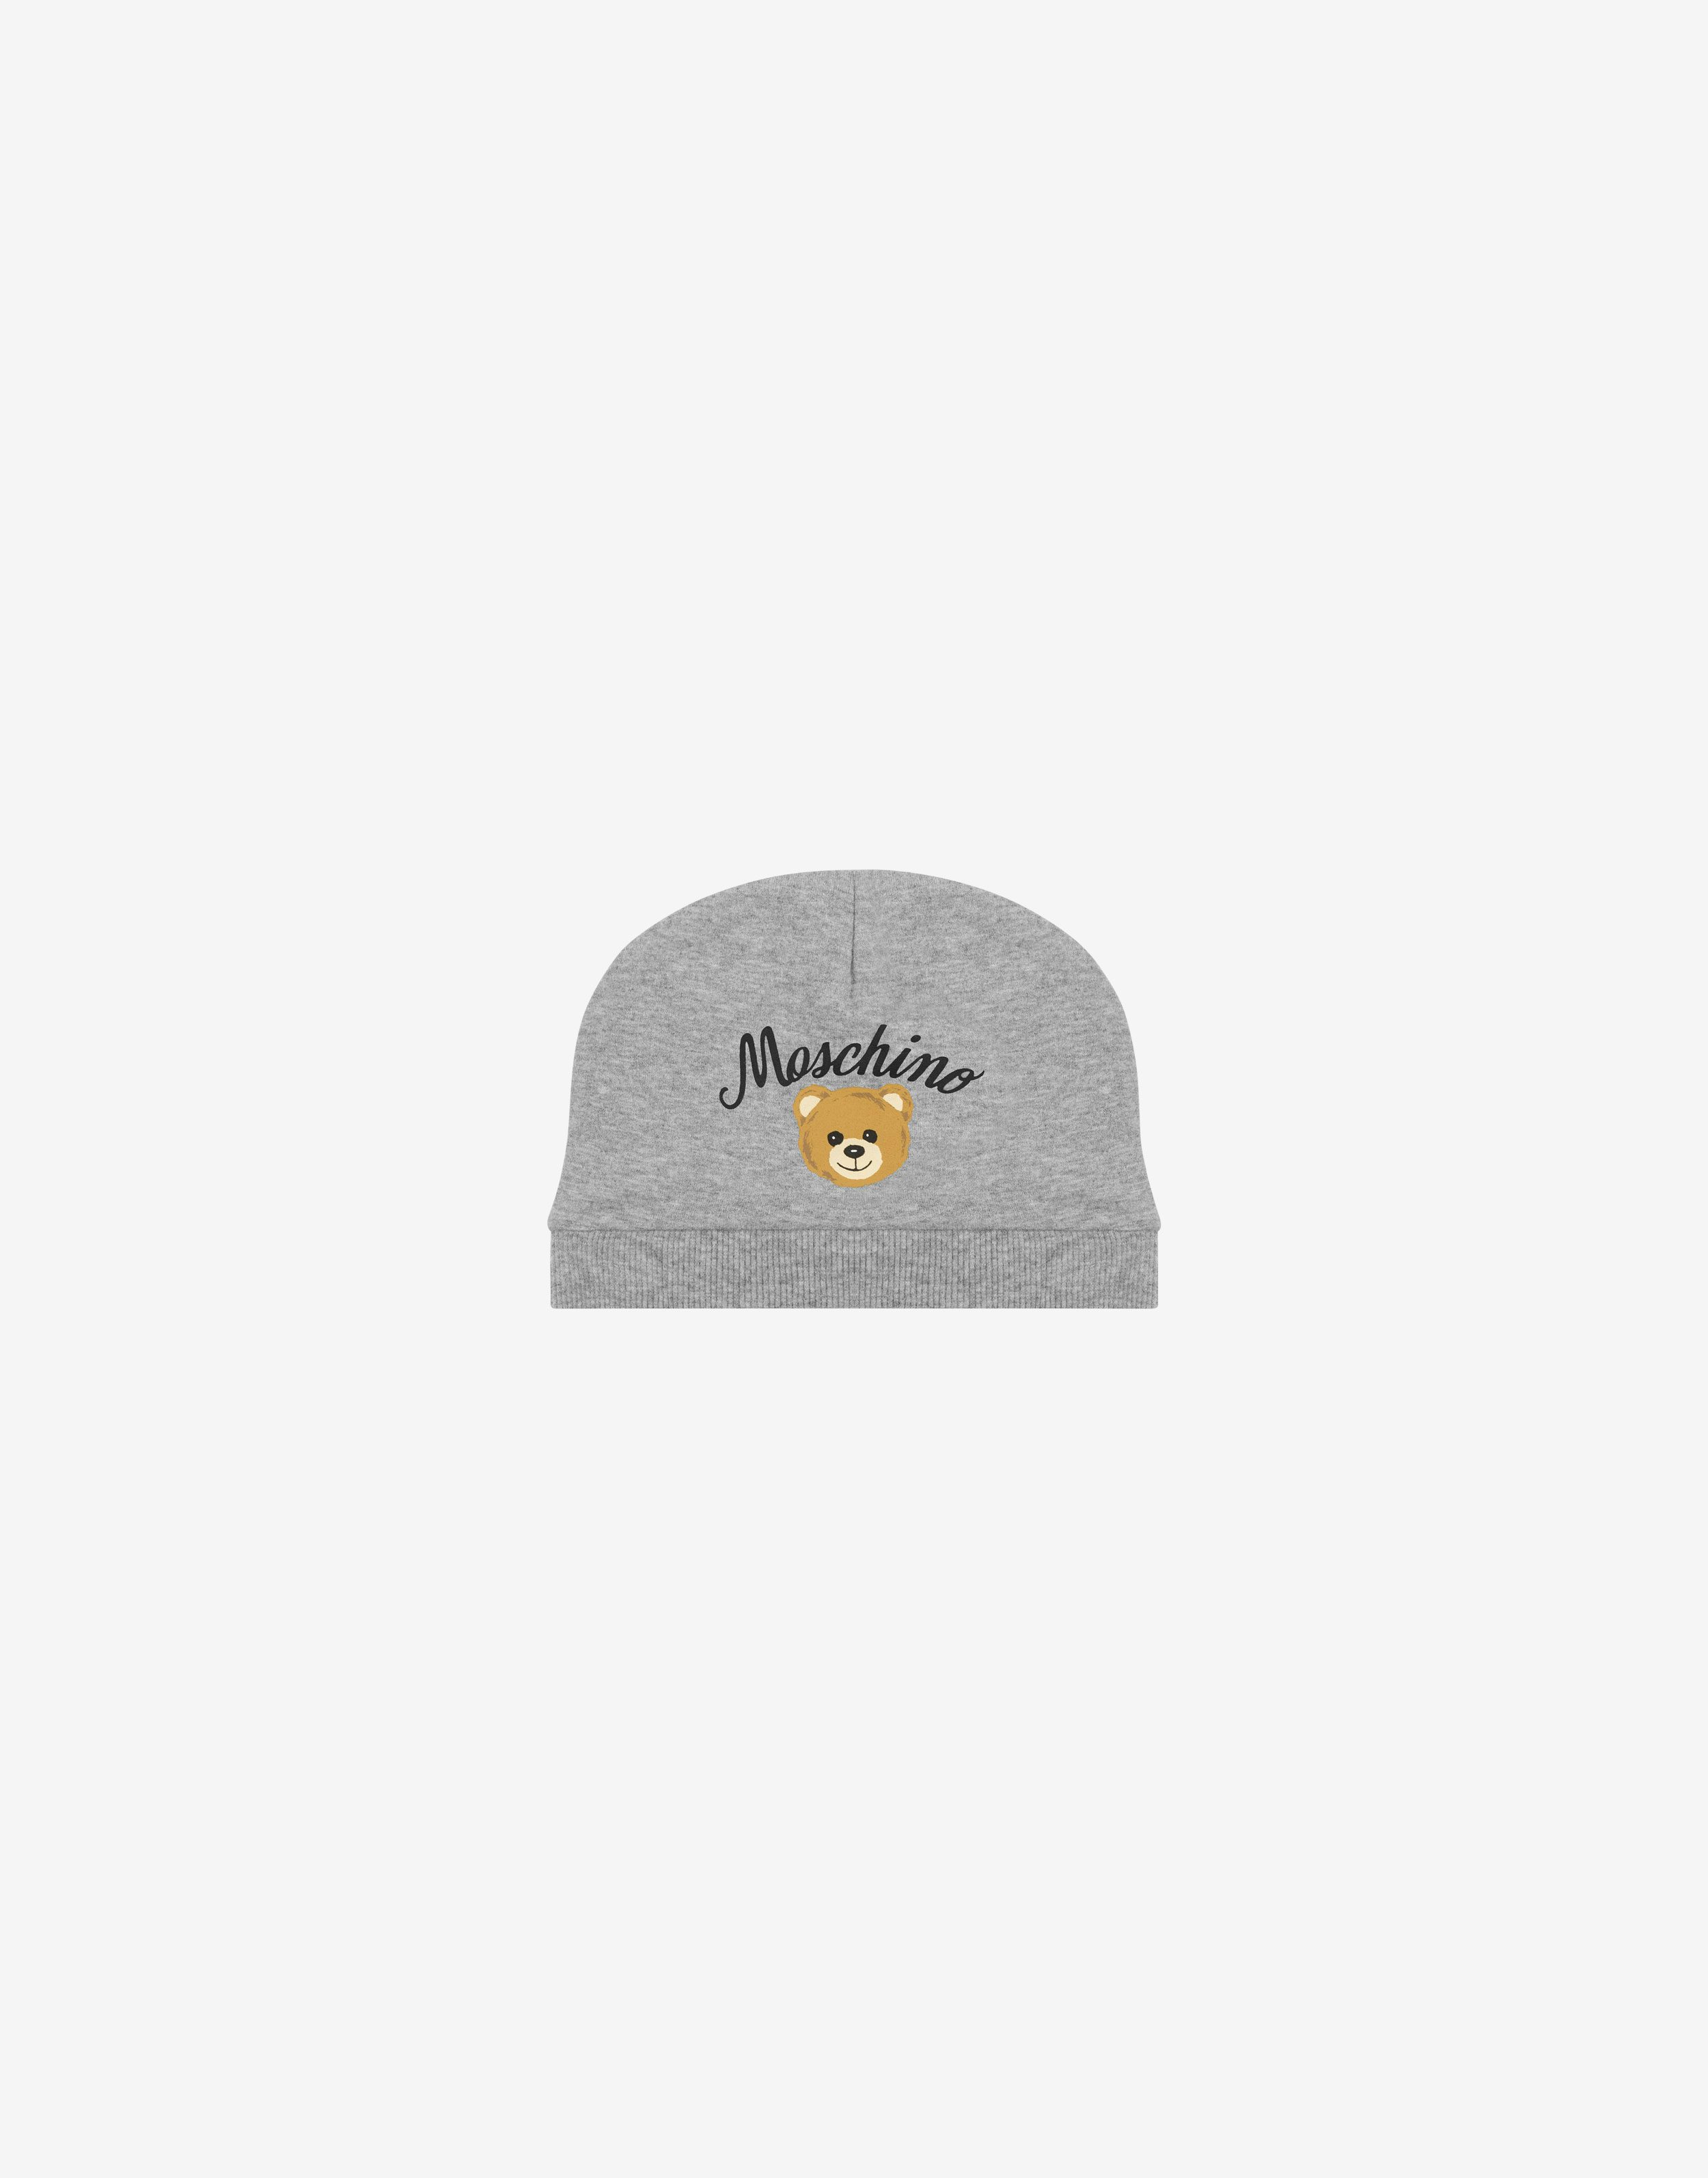 Moschino Teddy Bear fleece hat